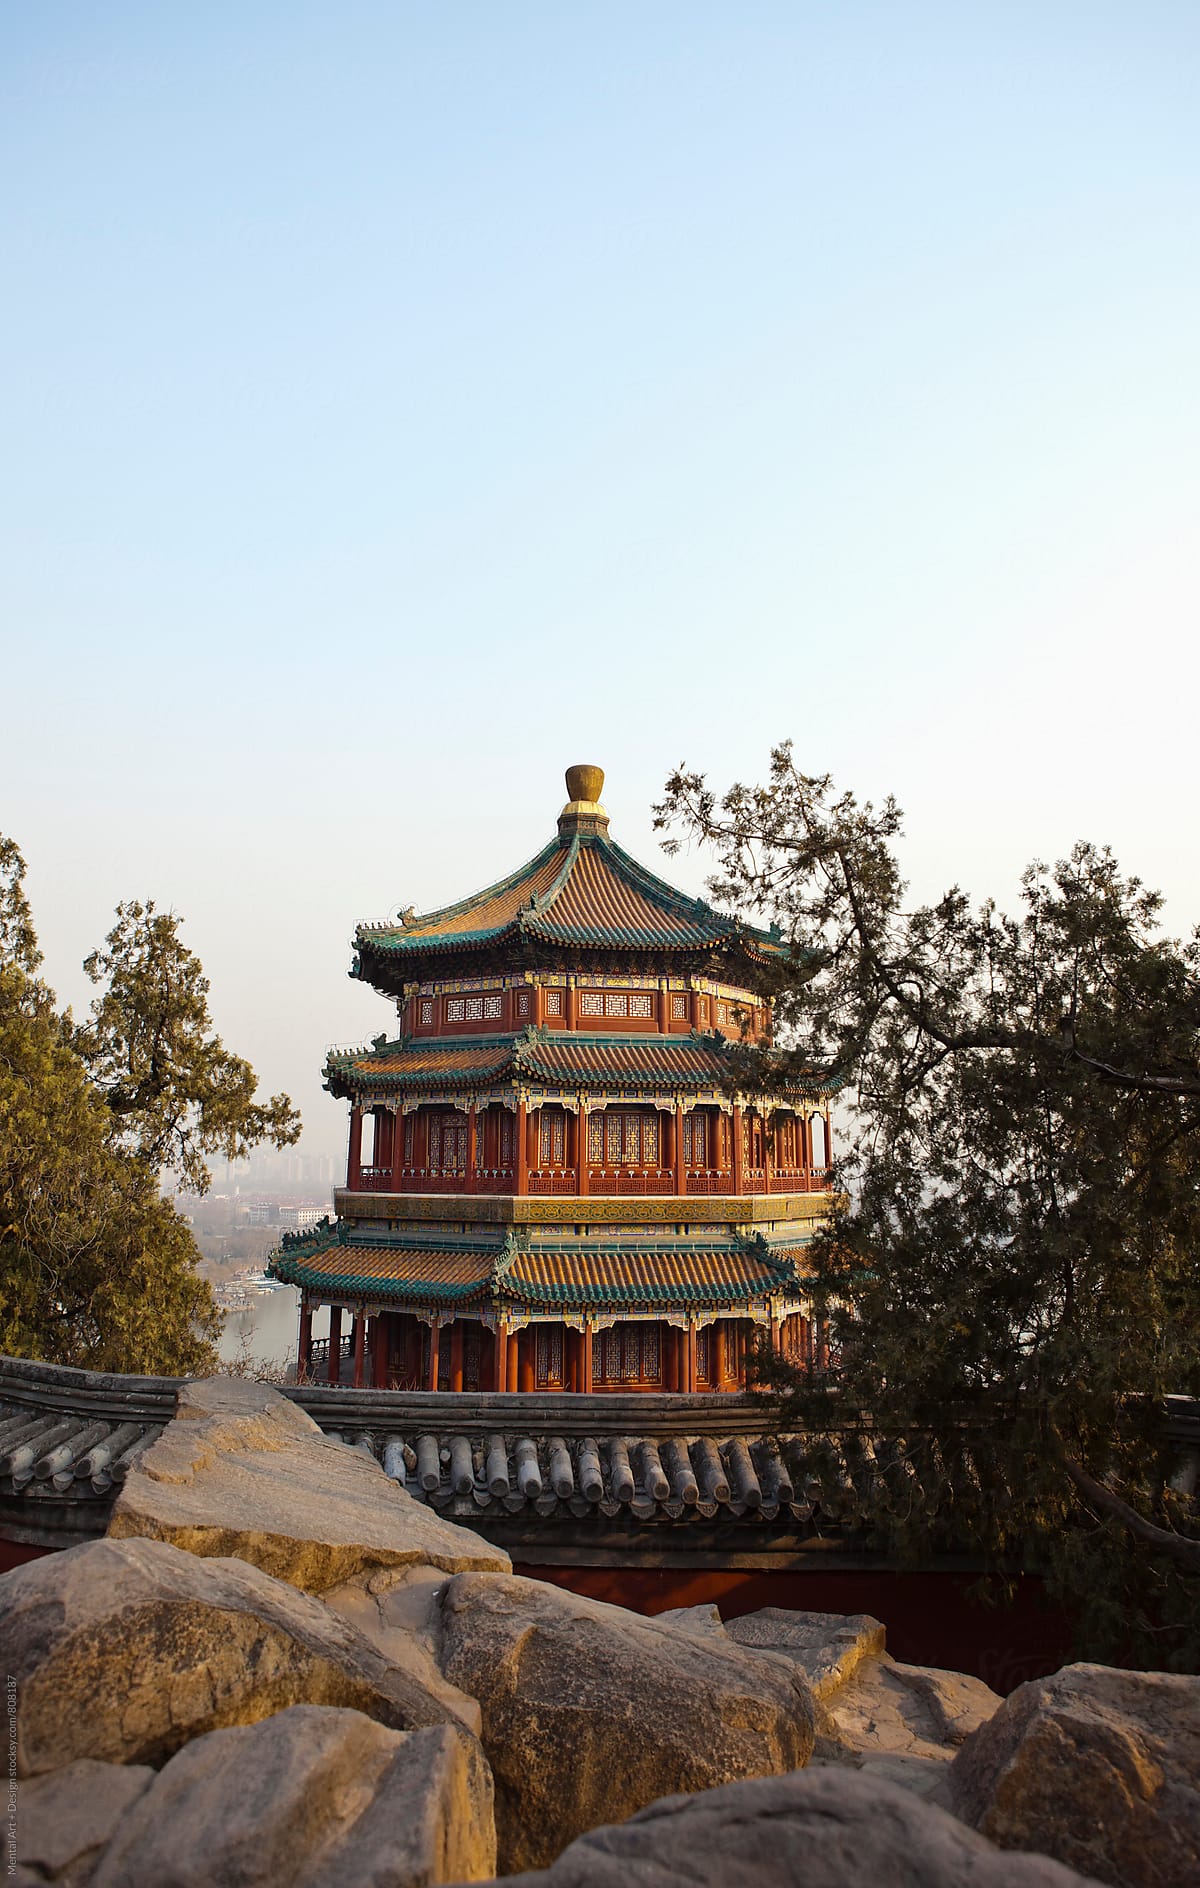 Summer Palace,Forbidden City, Beijing, China